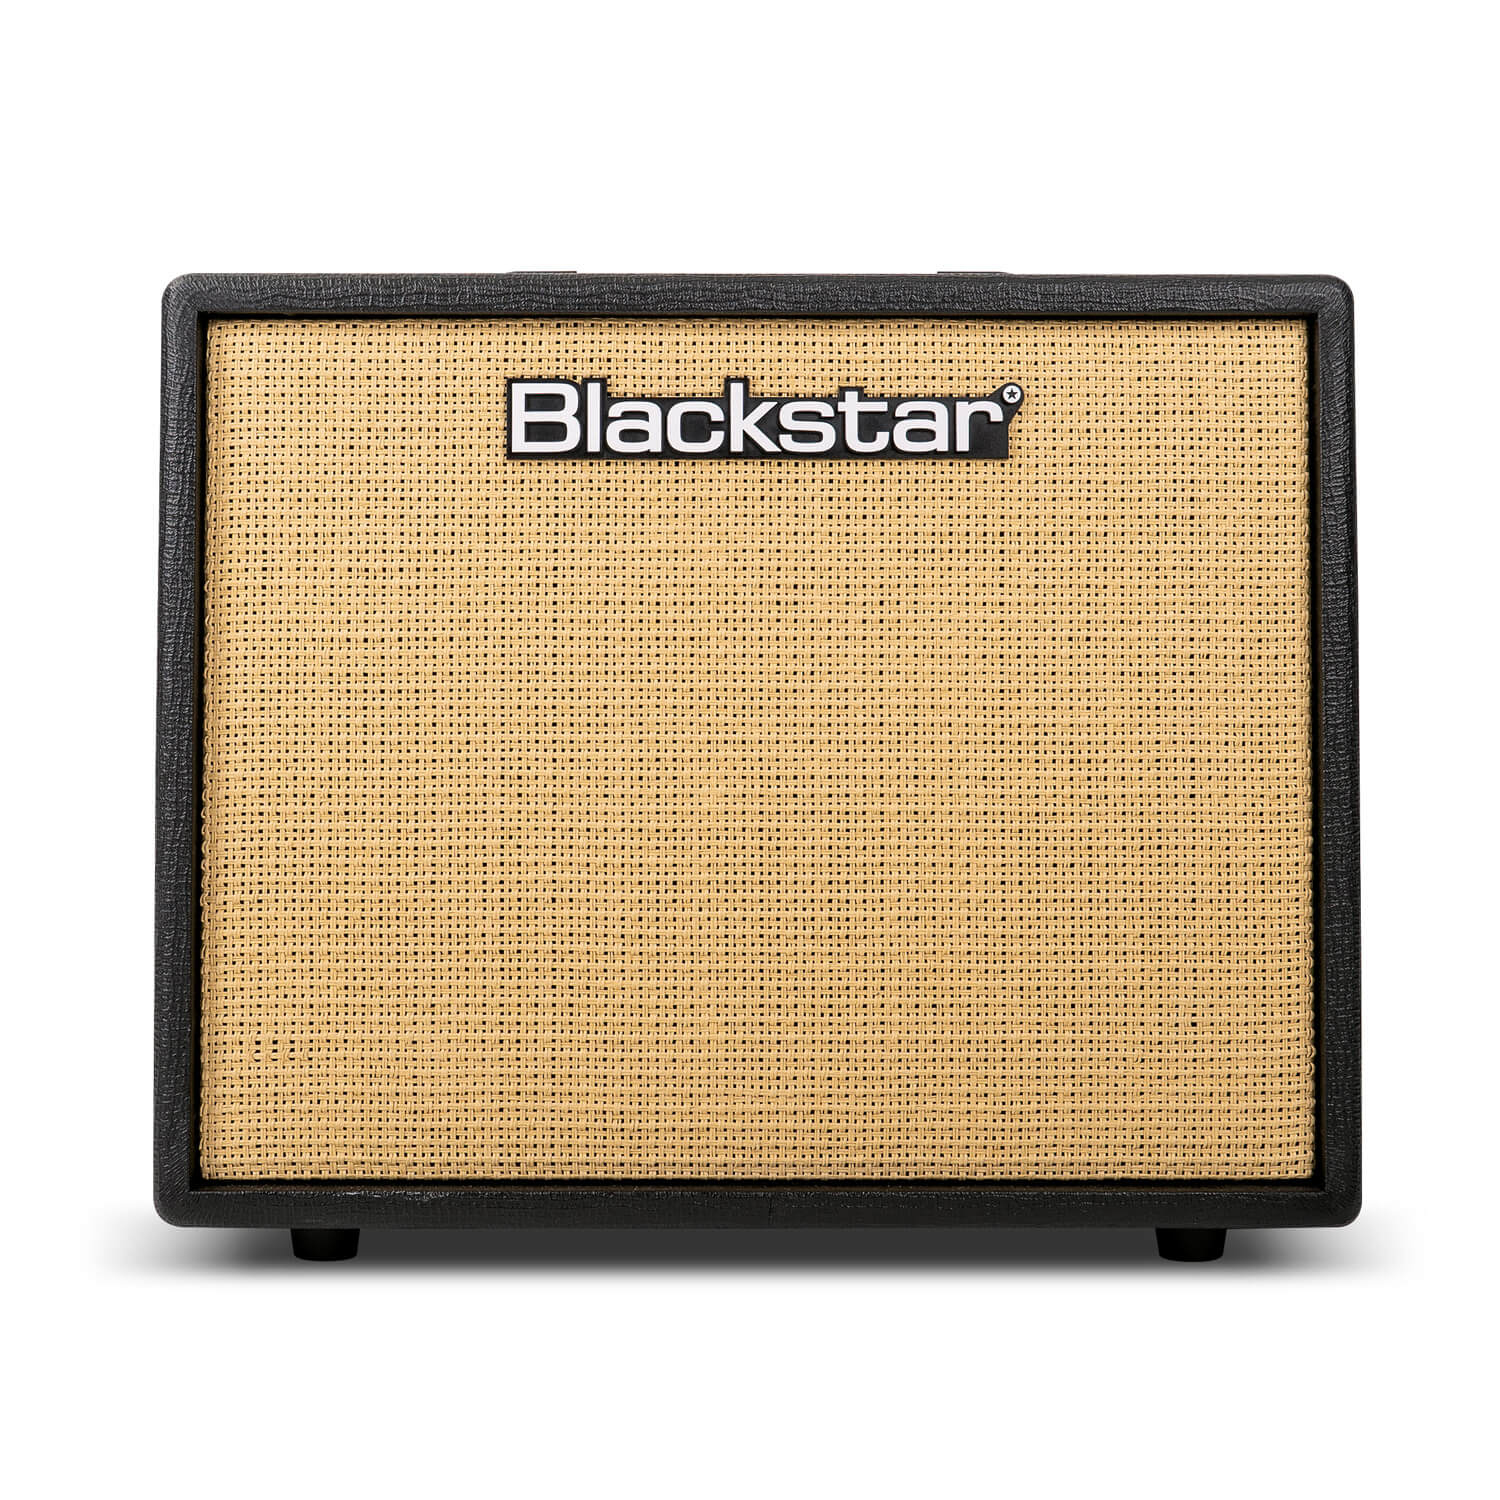 Blackstar Debut 50R (Black)